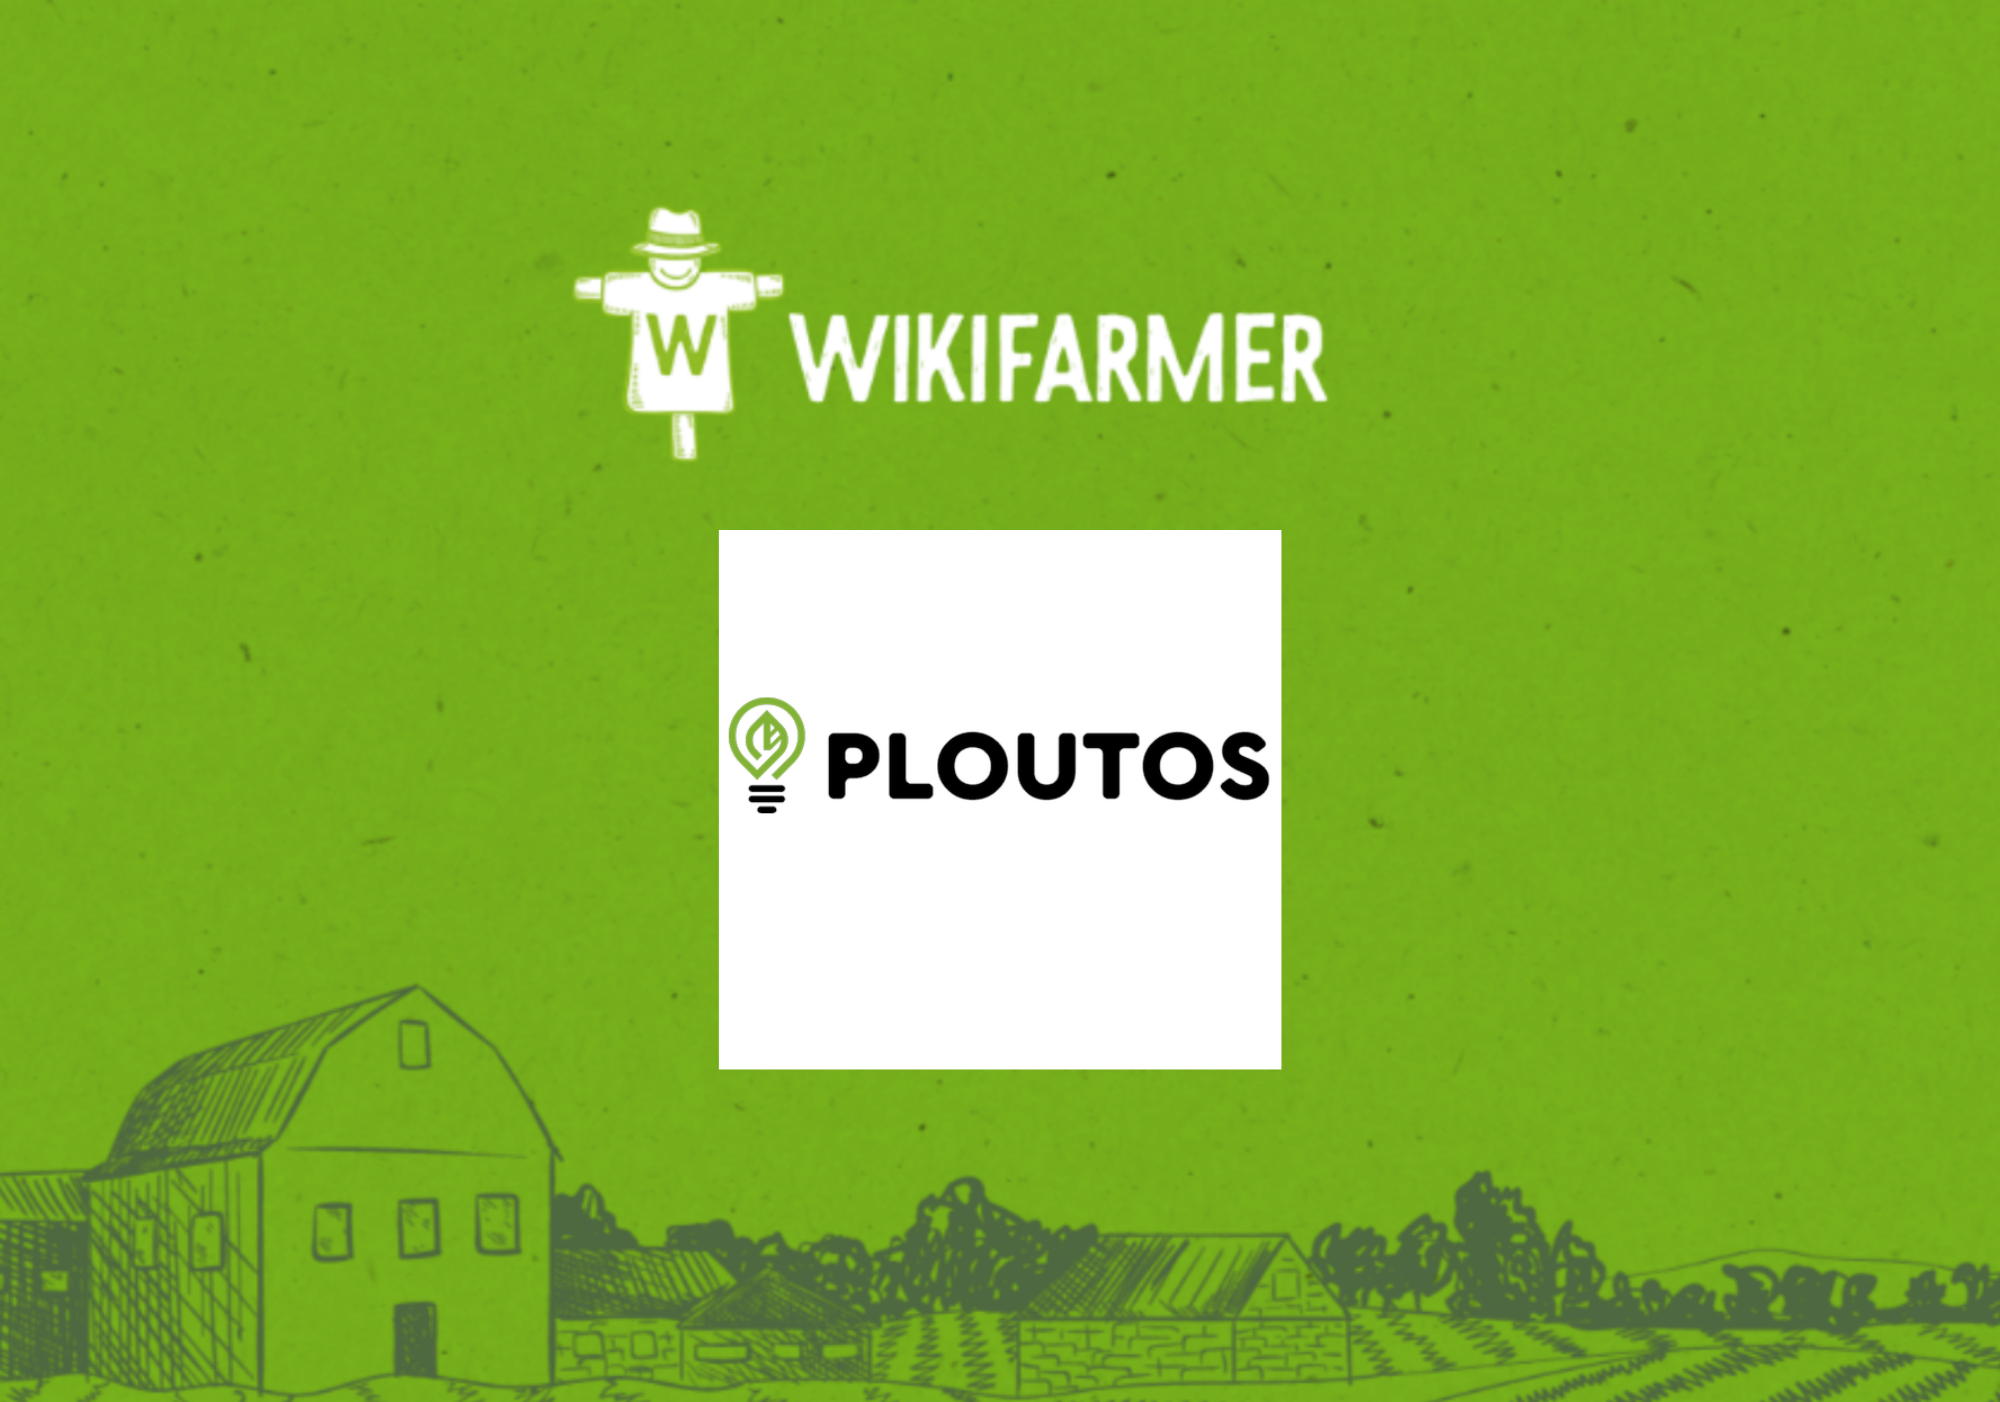 Partnership between Wikifarmer and Ploutos